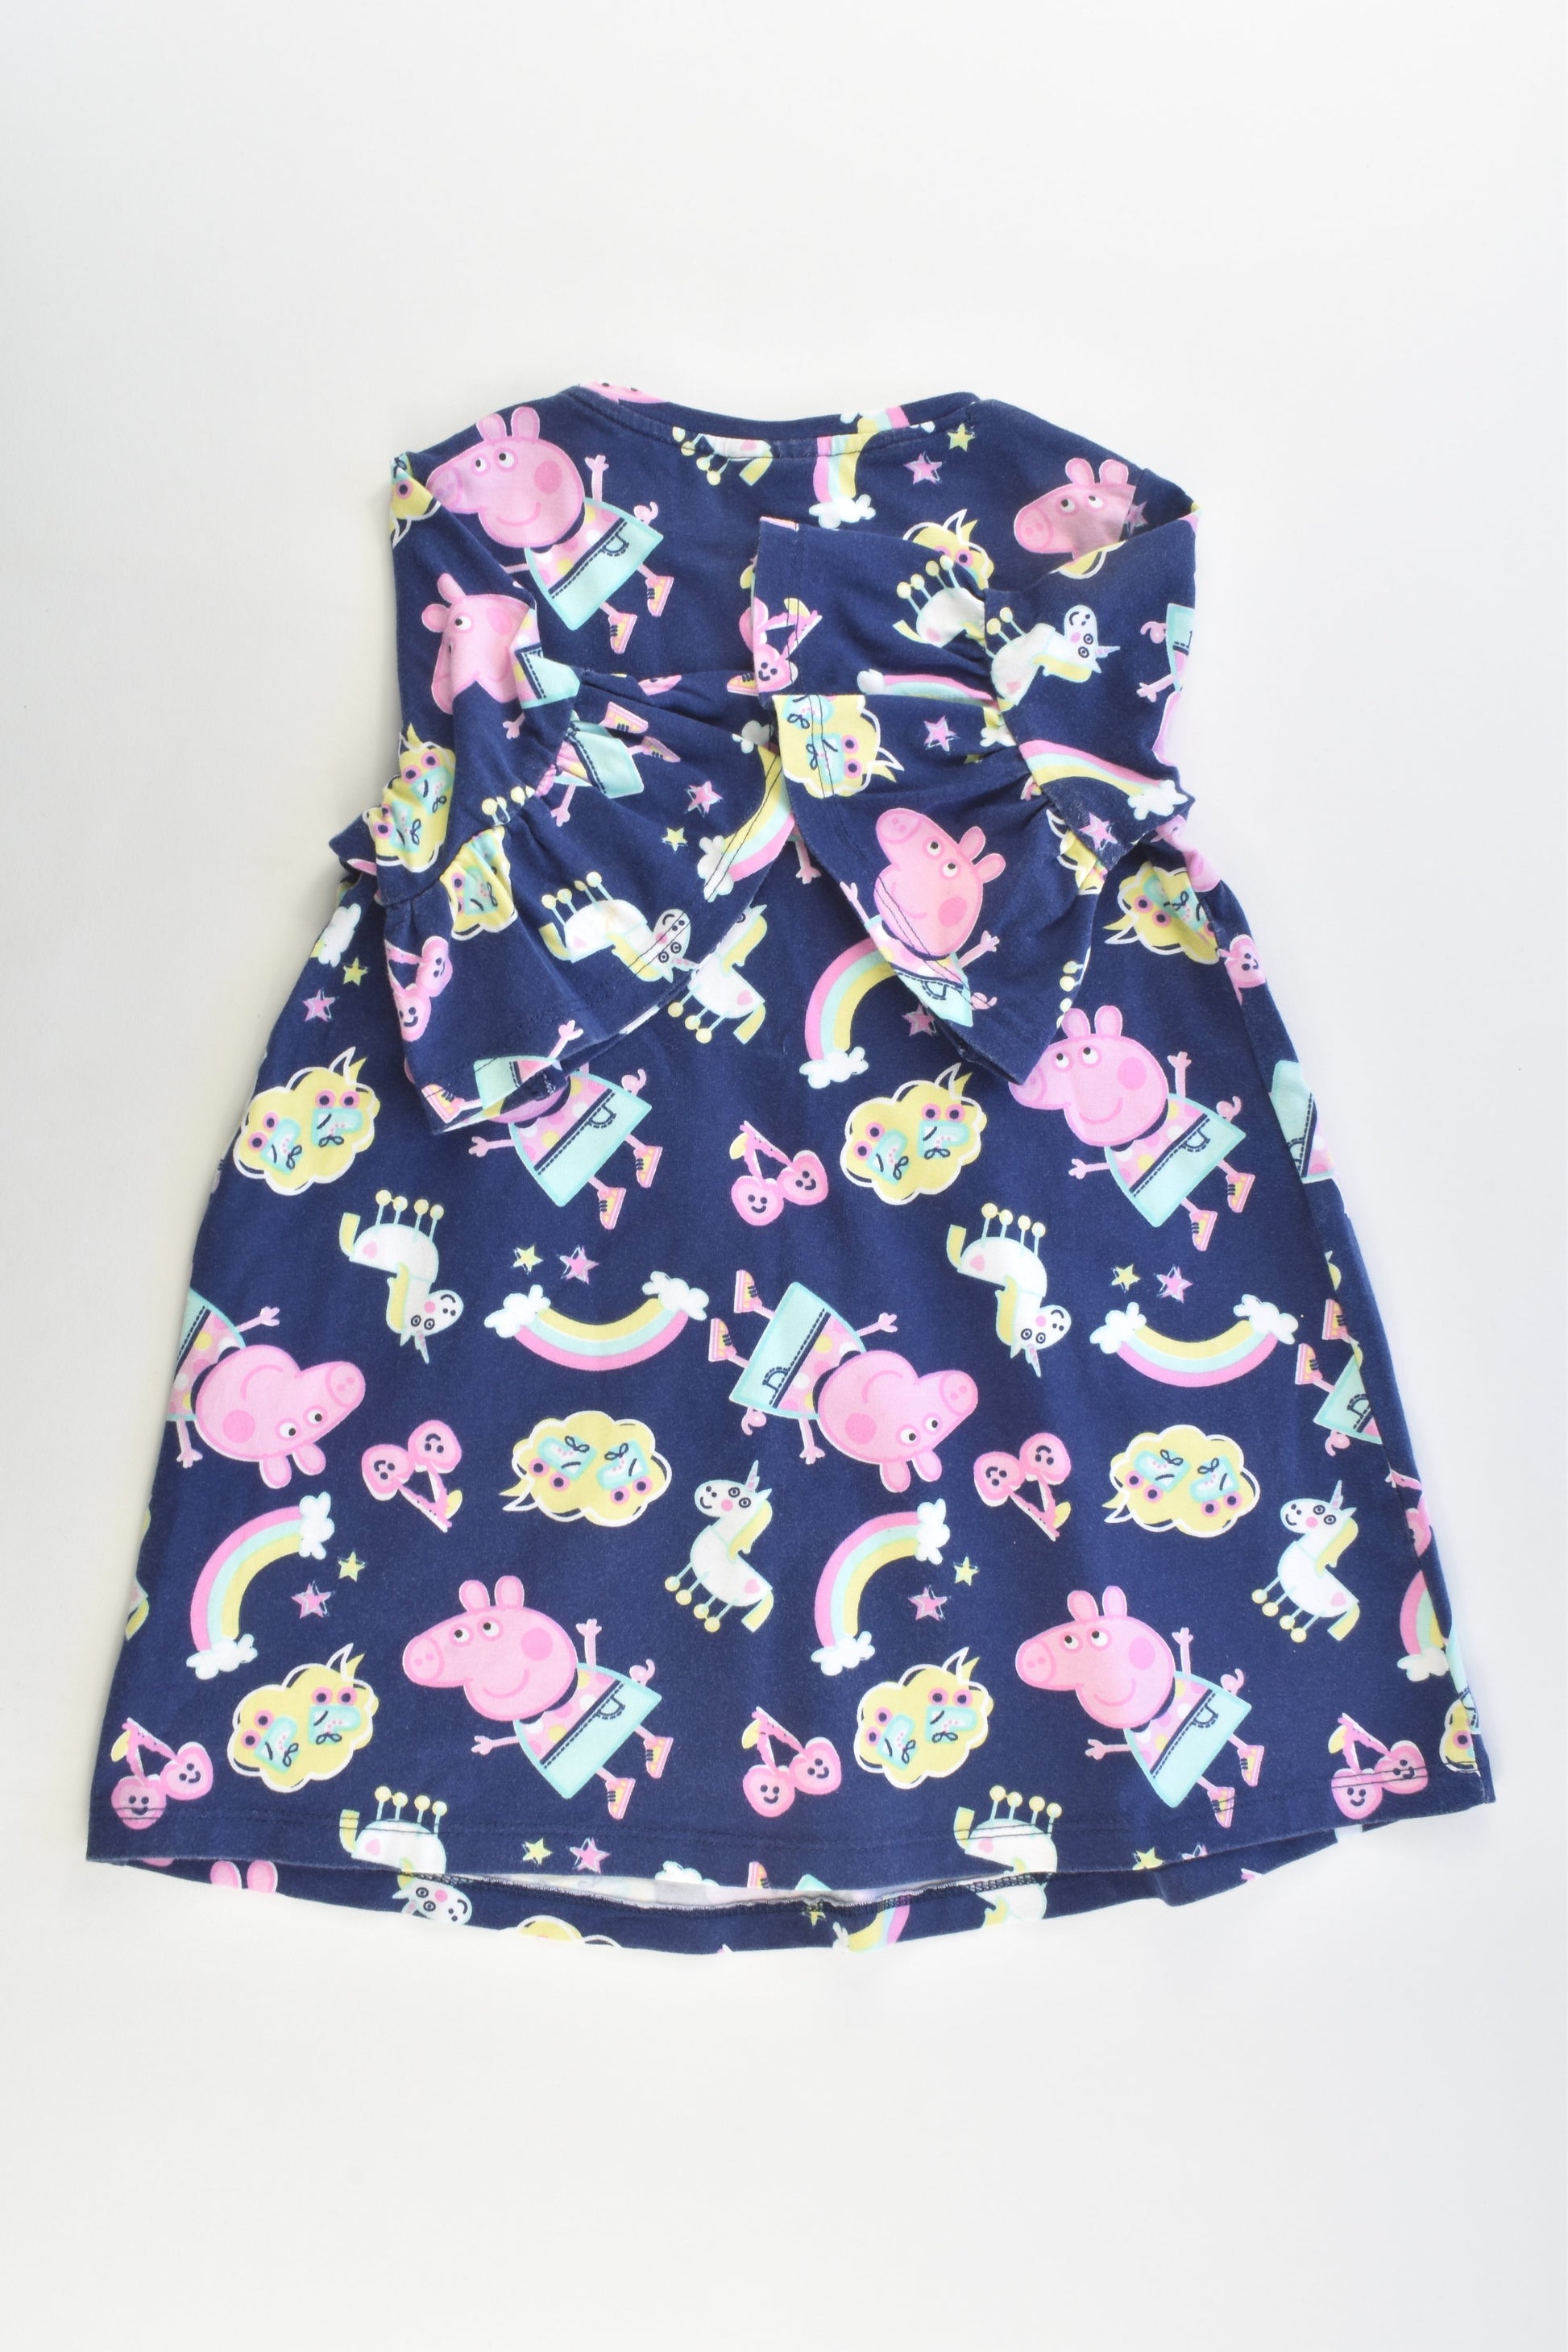 Peppa Pig Size 2-3 Dress